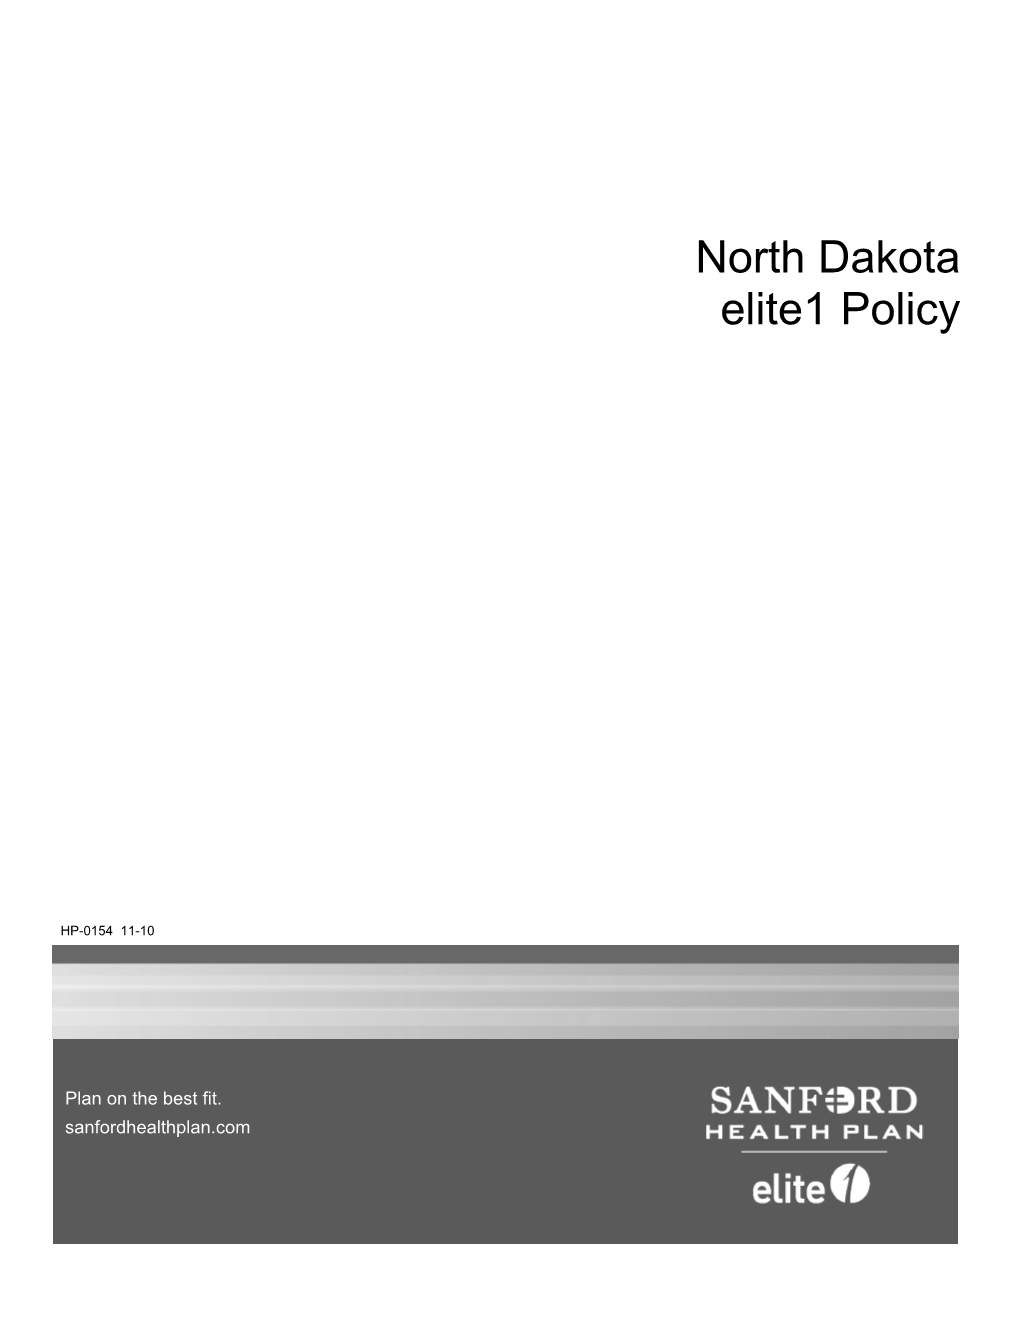 North Dakota Elite1 Policy